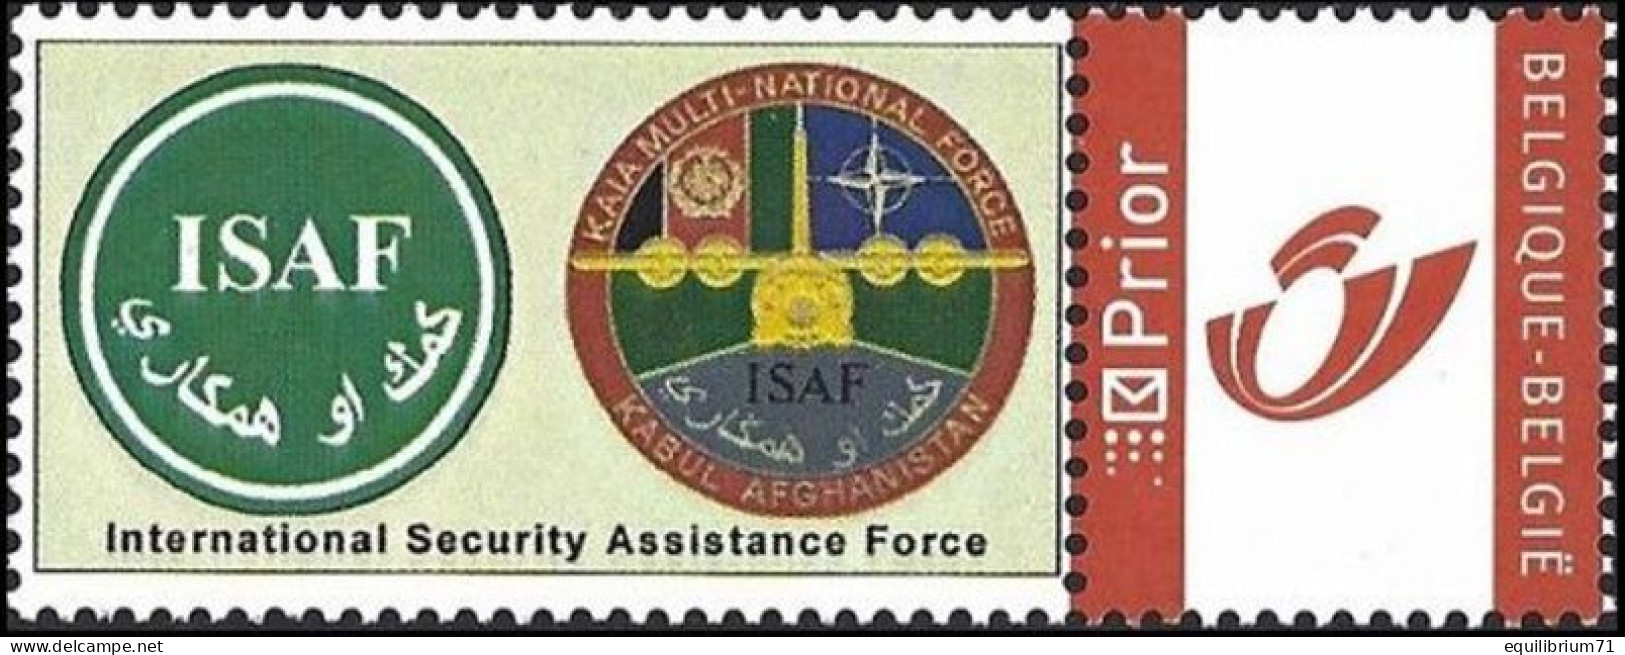 DUOSTAMP** / MYSTAMP** - International Security Assistance Force - ISAF - Kabul Afghanistan - Postfris